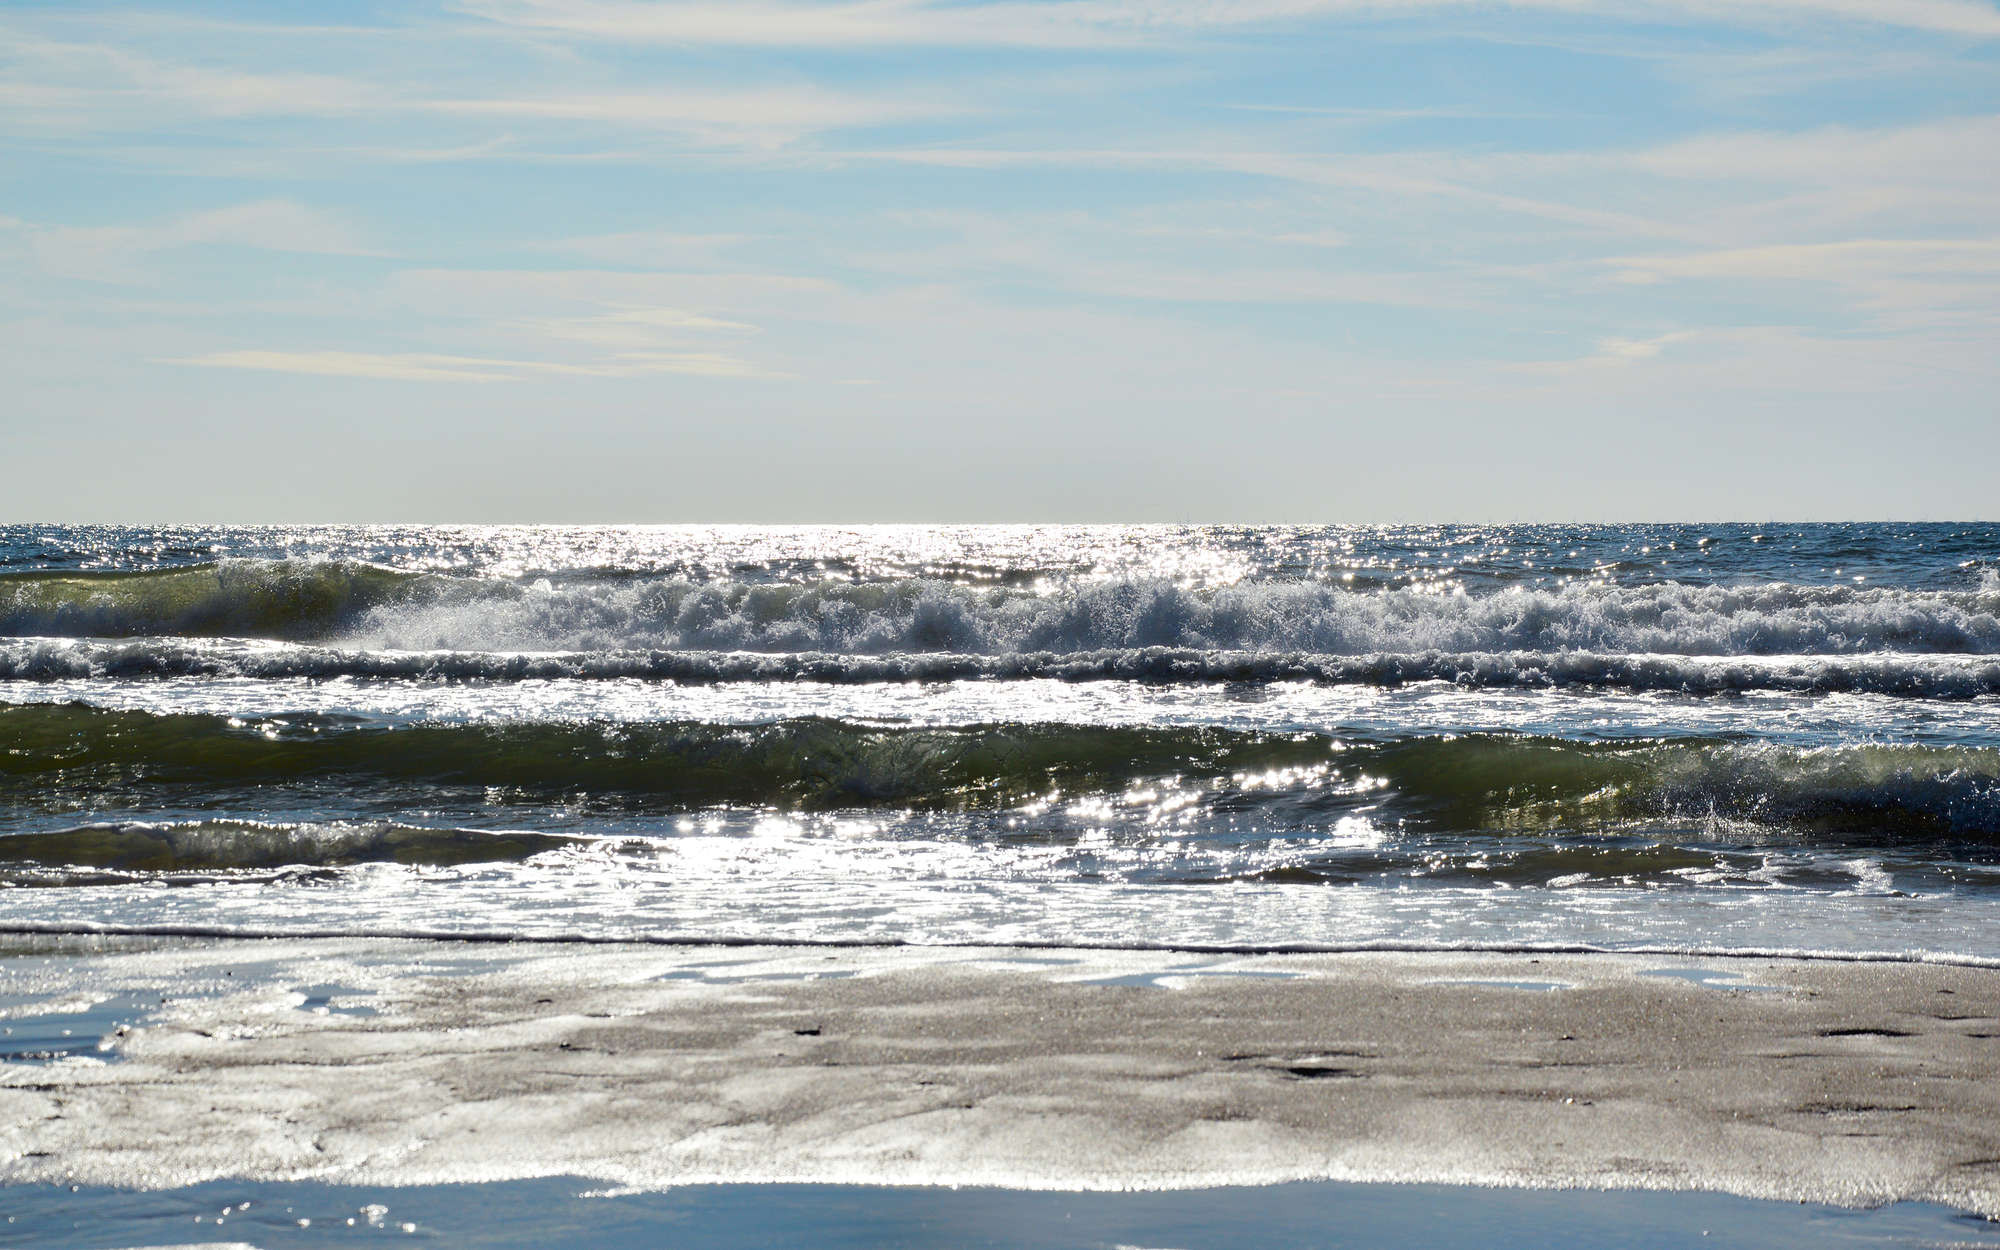             Fototapete Nordseestrand mit Wellen – Perlmutt Glattvlies
        